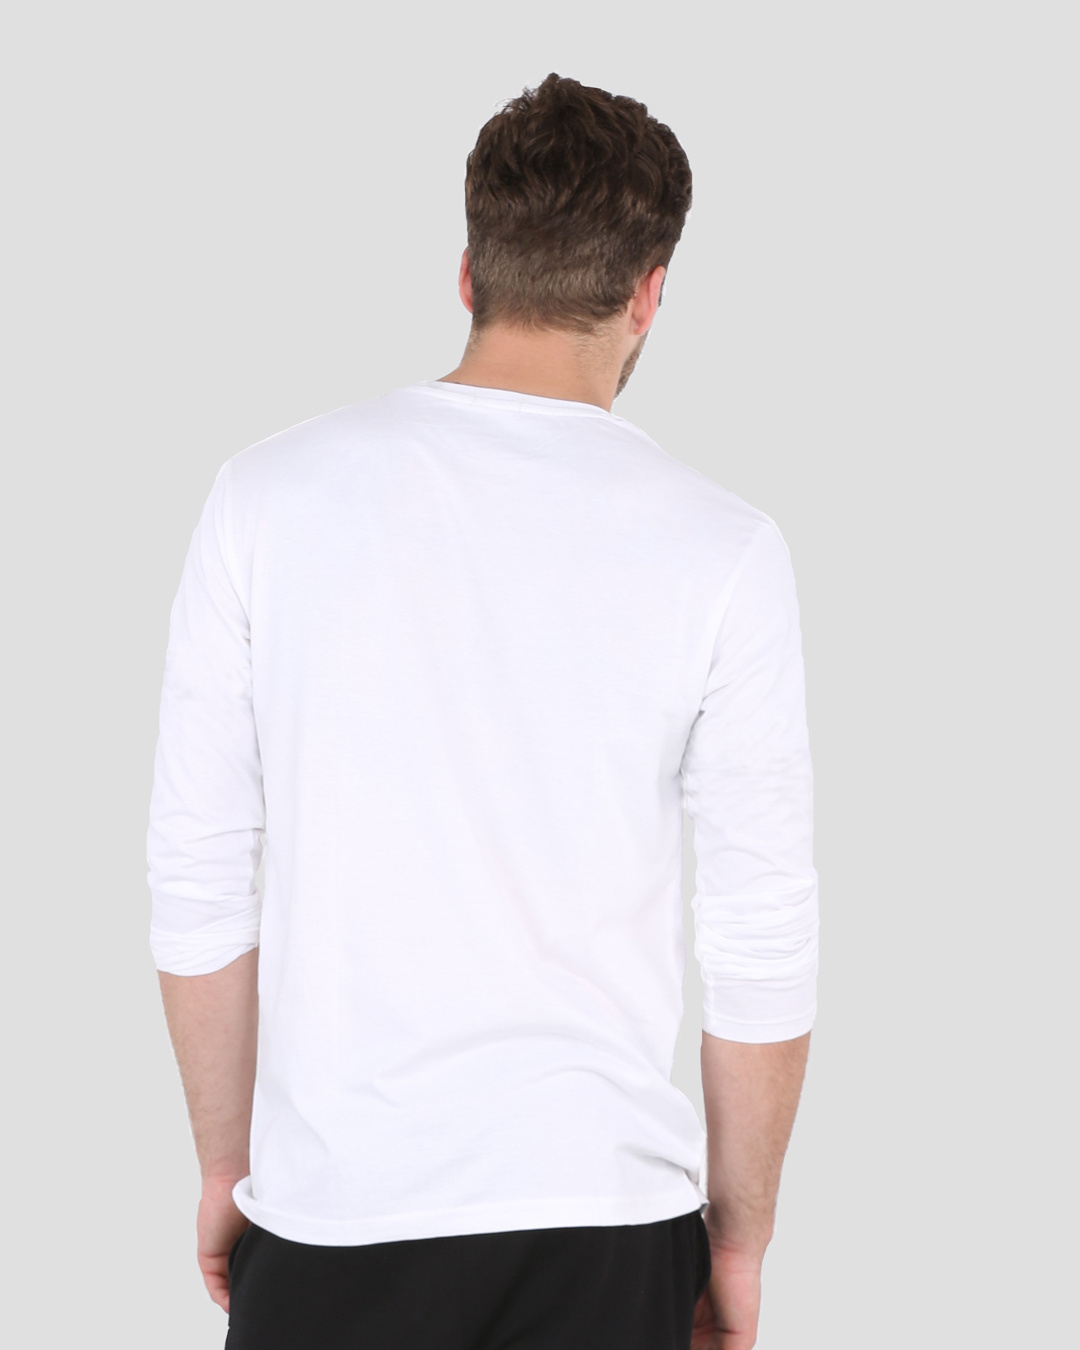 Shop 2020 Jerry Full Sleeve T-Shirt (TJL) White-Back